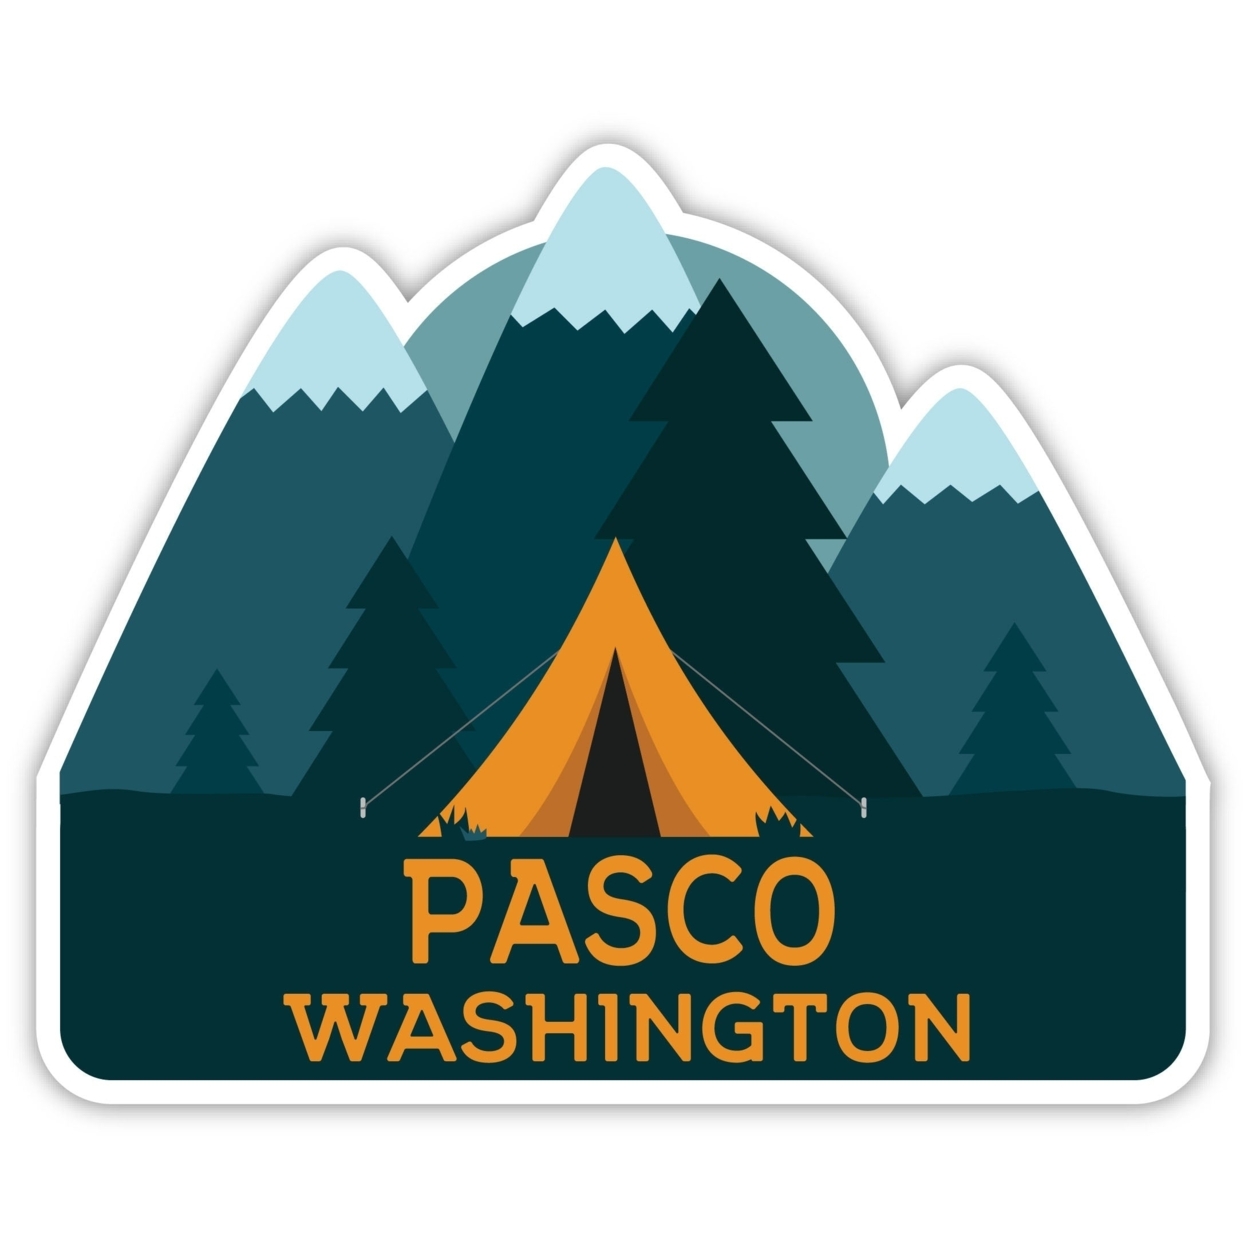 Pasco Washington Souvenir Decorative Stickers (Choose Theme And Size) - Single Unit, 4-Inch, Adventures Awaits